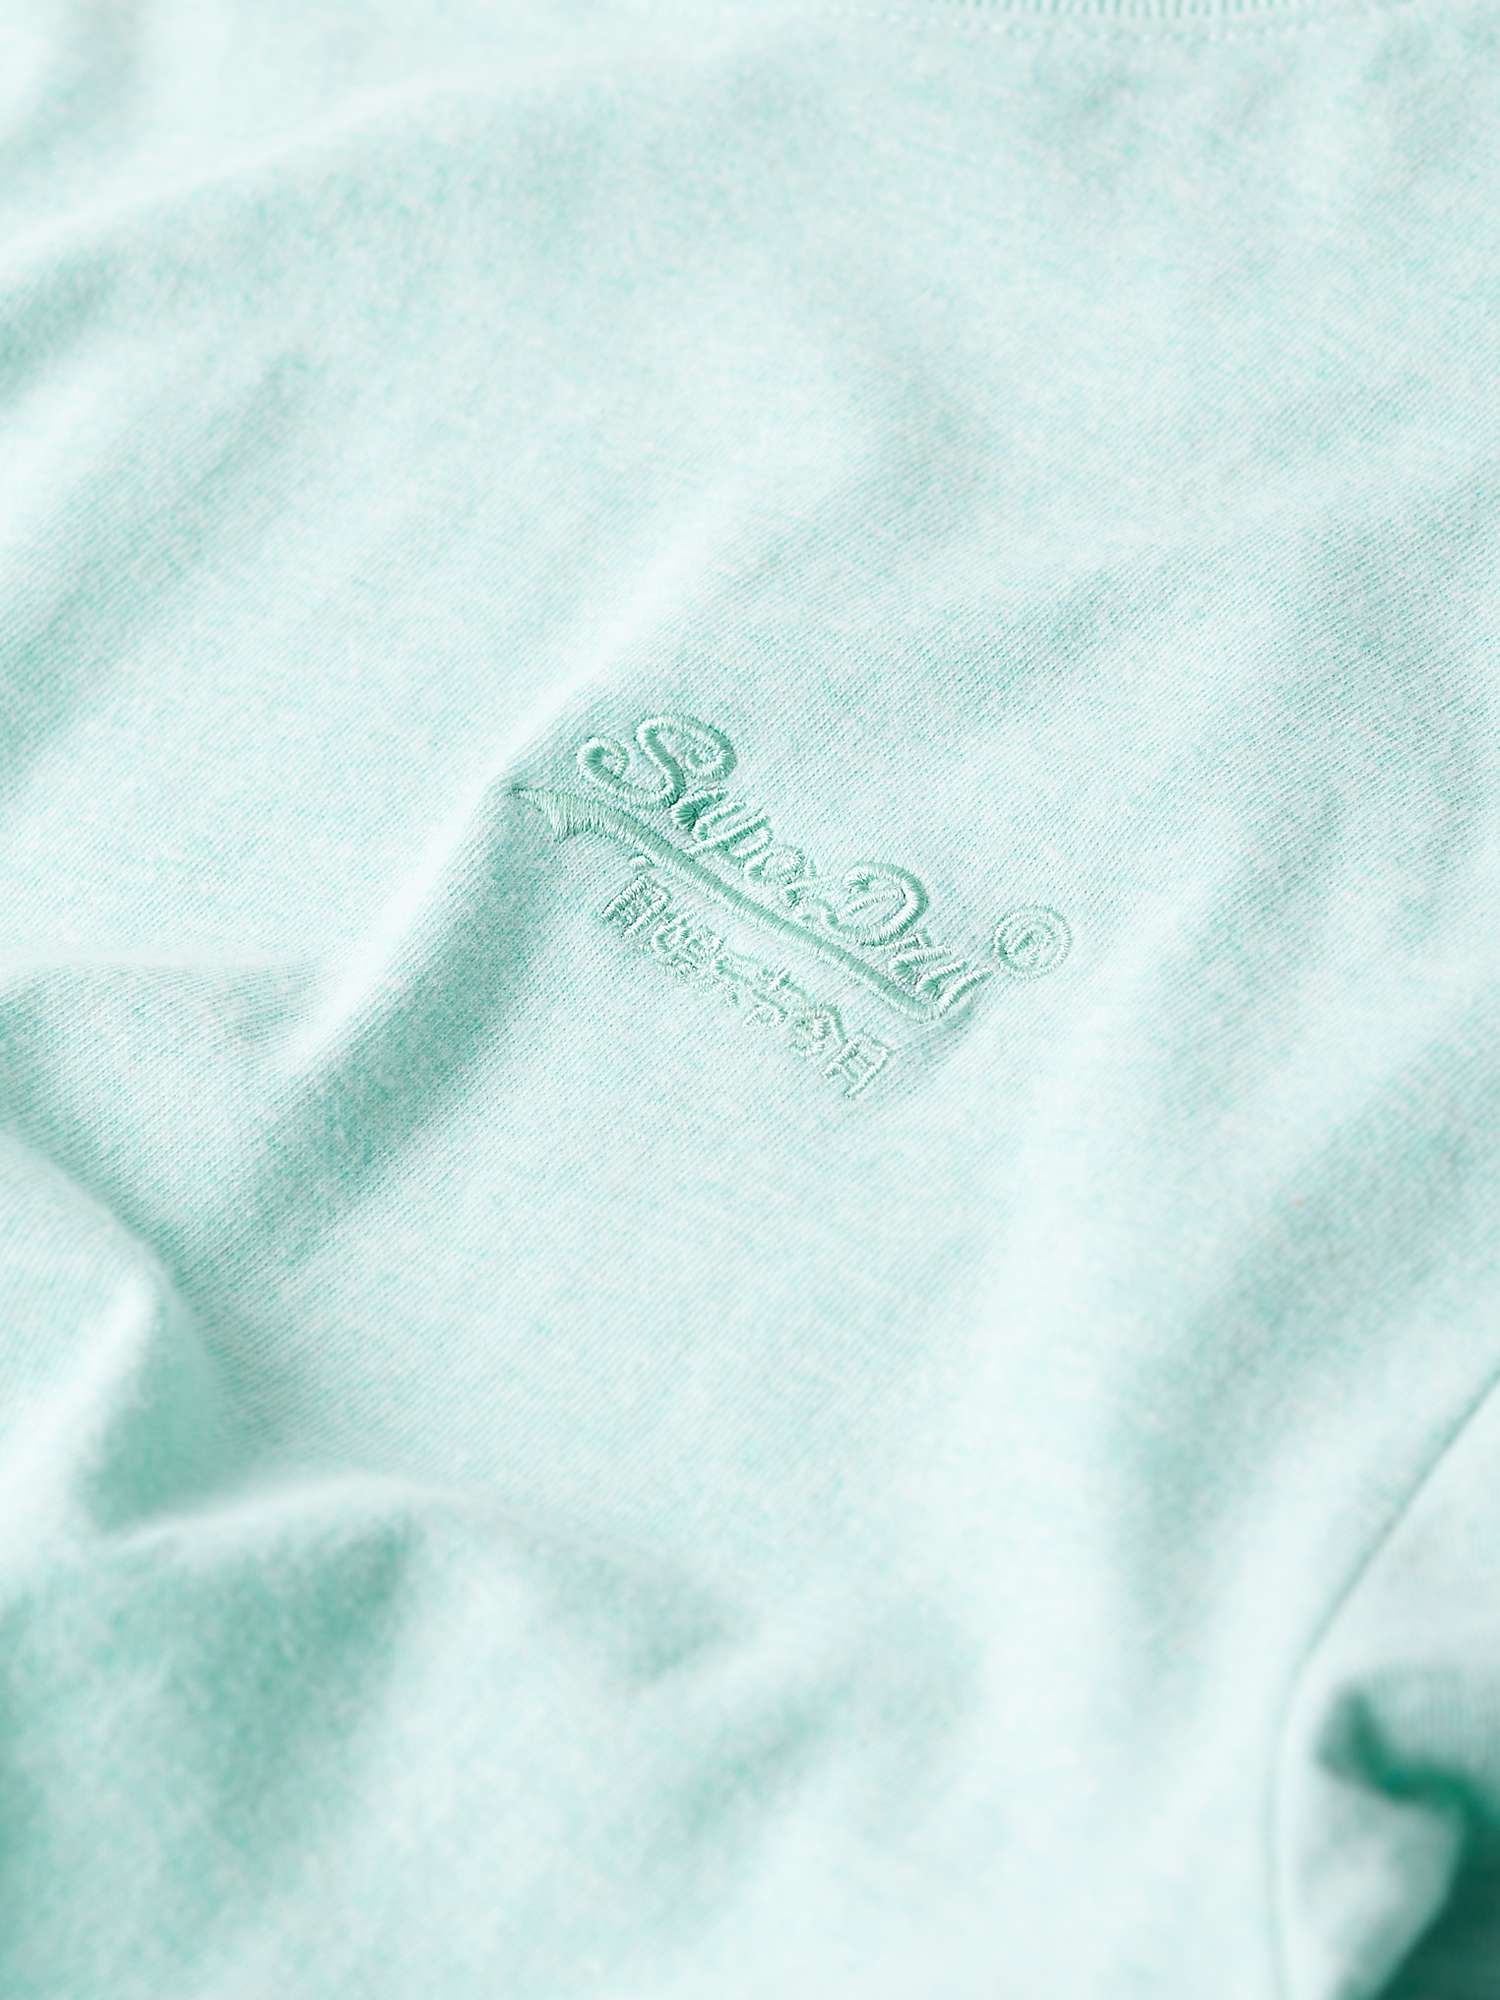 Buy Superdry Essential Organic Cotton Logo T-Shirt Online at johnlewis.com